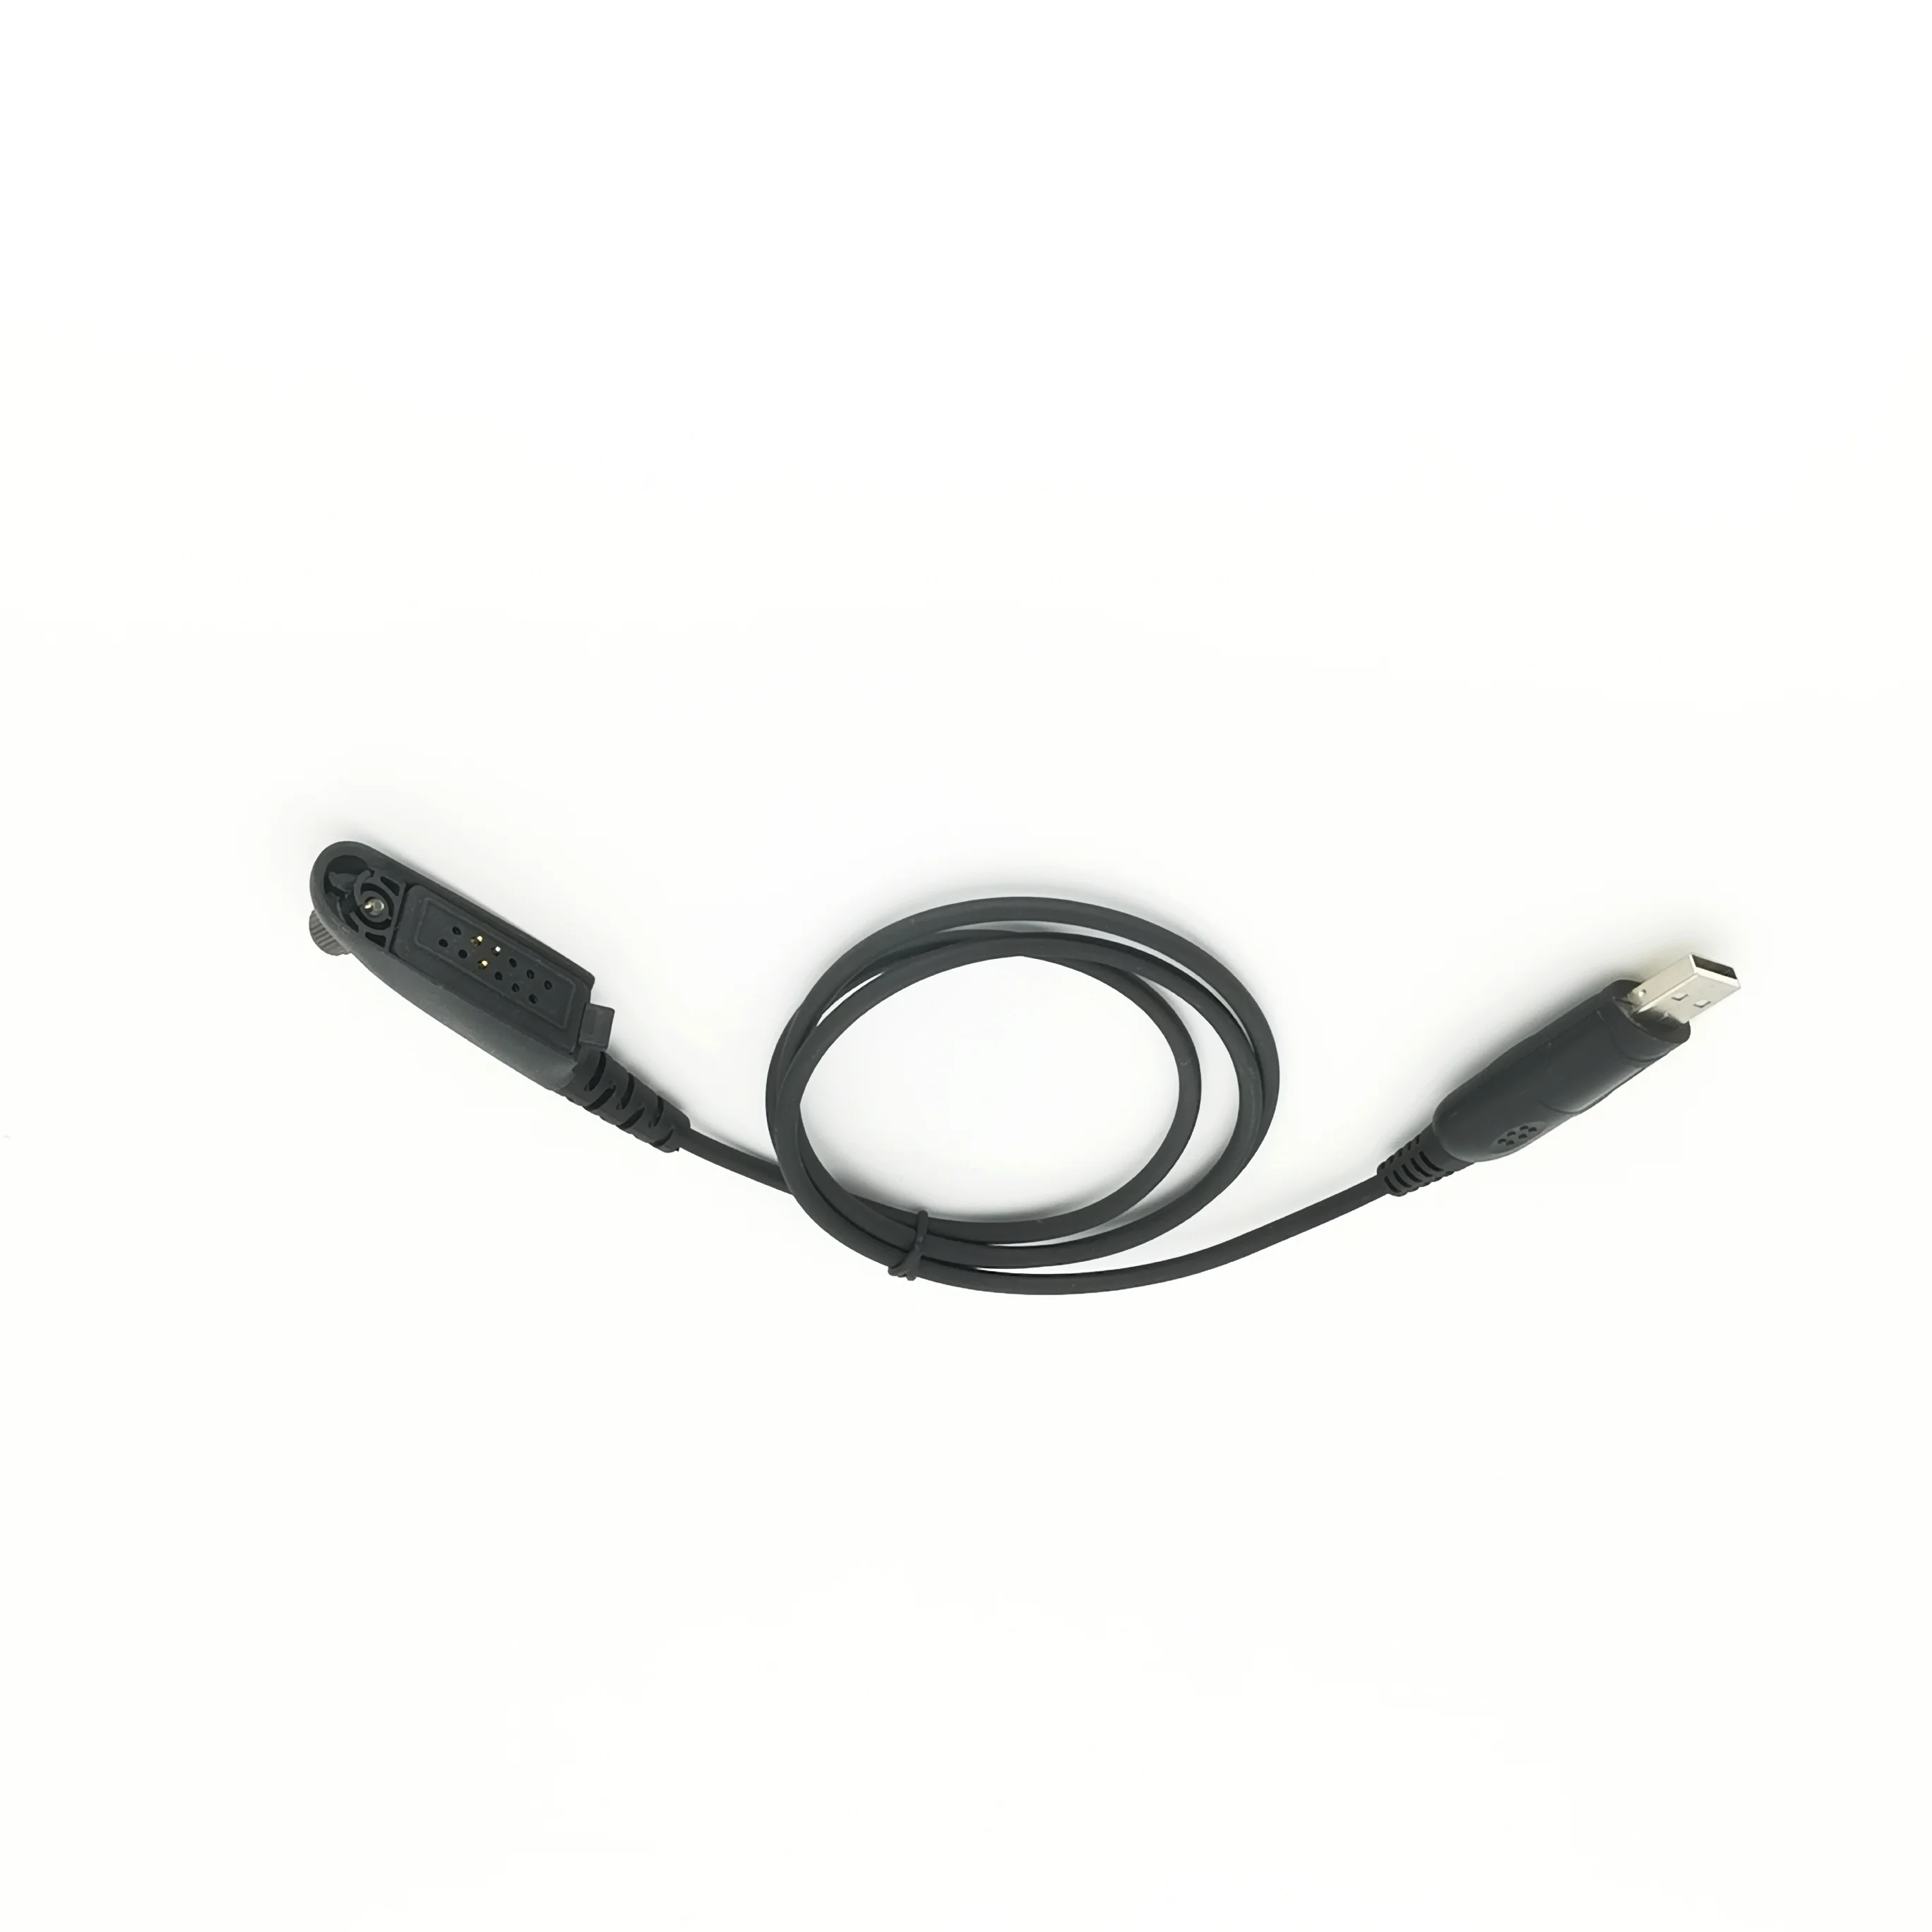 GP328 USB Programming cable For Motorola HT750 HT1250 PRO5150 GP340 GP380 GP640 GP680 GP960 GP1280 PR860 MTX850 walkie talkie